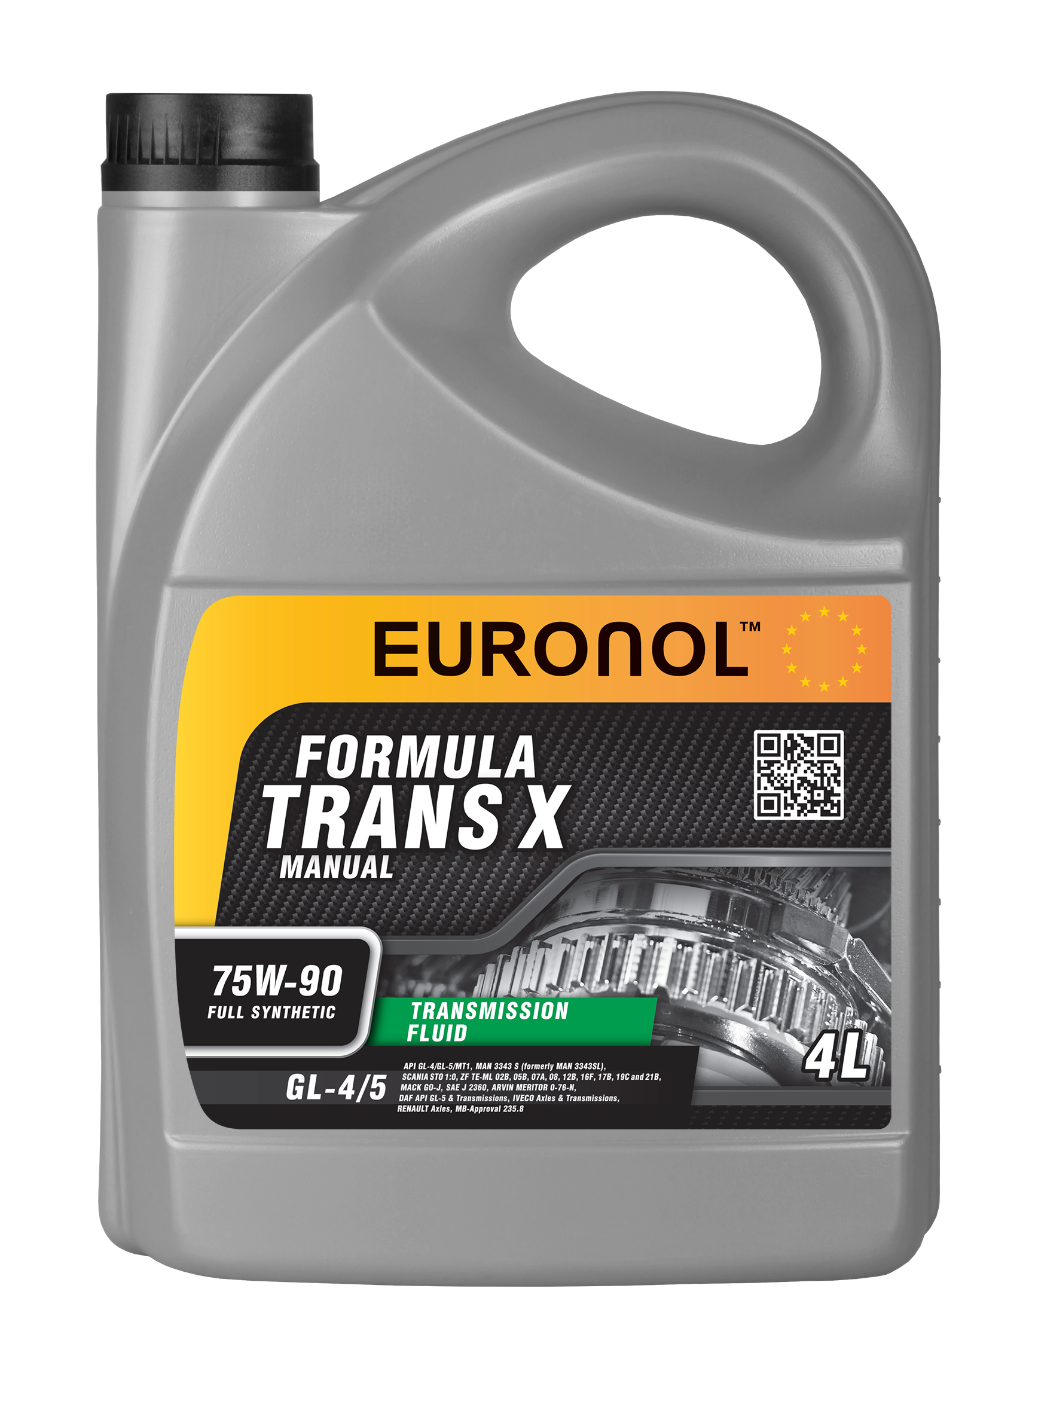 фото Трансмиссионное масло euronol trans x 75w-90 gl-4/5 4l